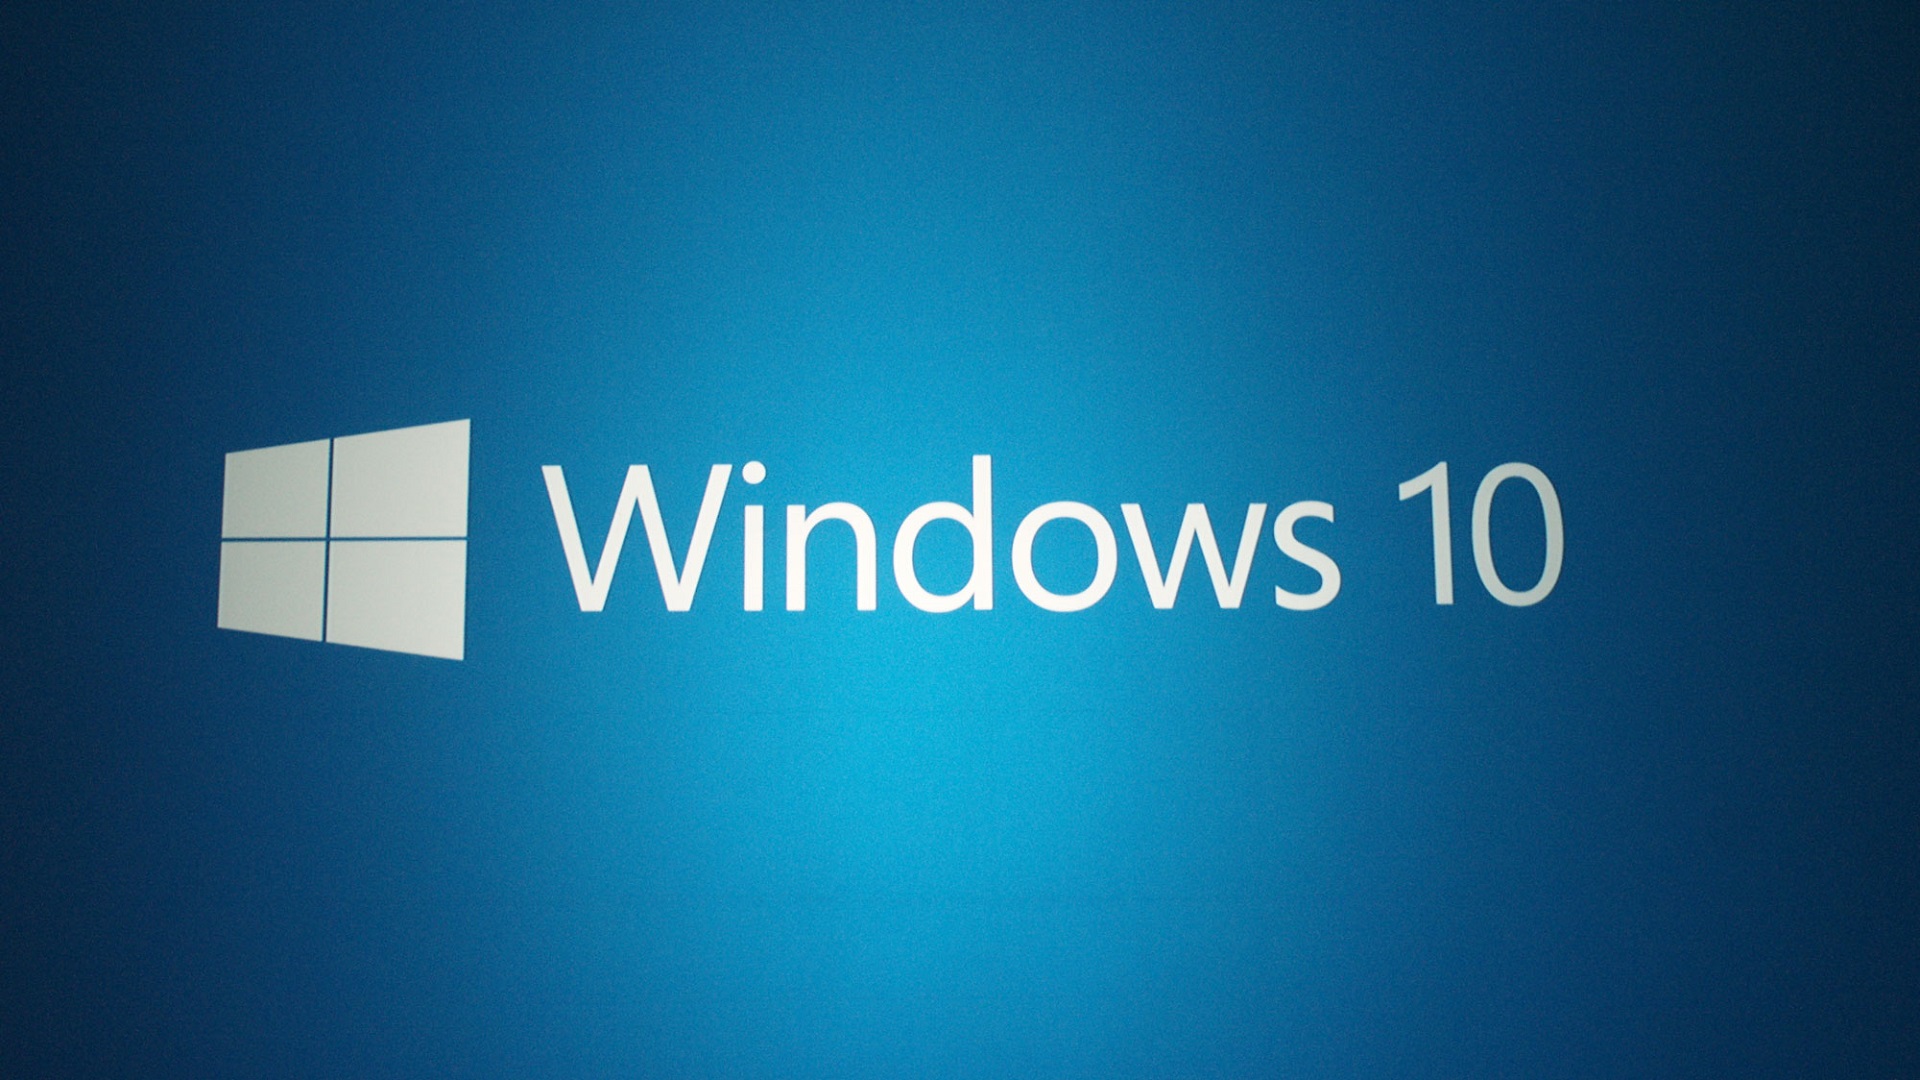 Windows 10 Desktop Wallpaper - Windows 10 Backgrounds